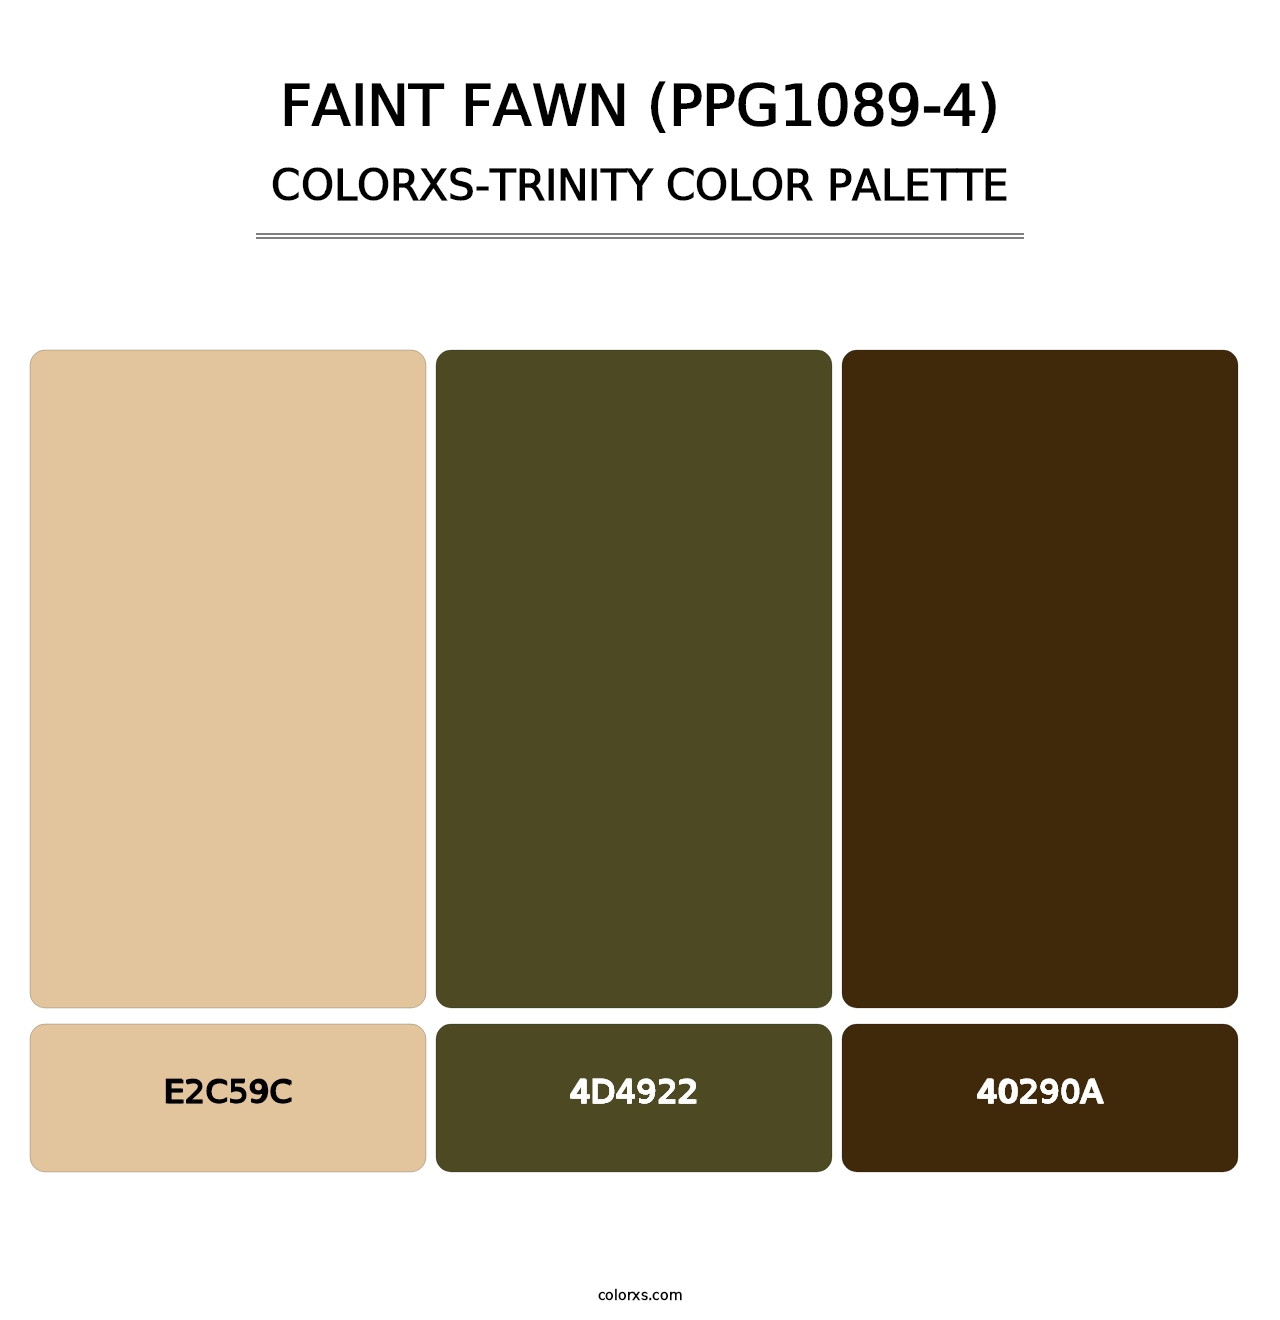 Faint Fawn (PPG1089-4) - Colorxs Trinity Palette